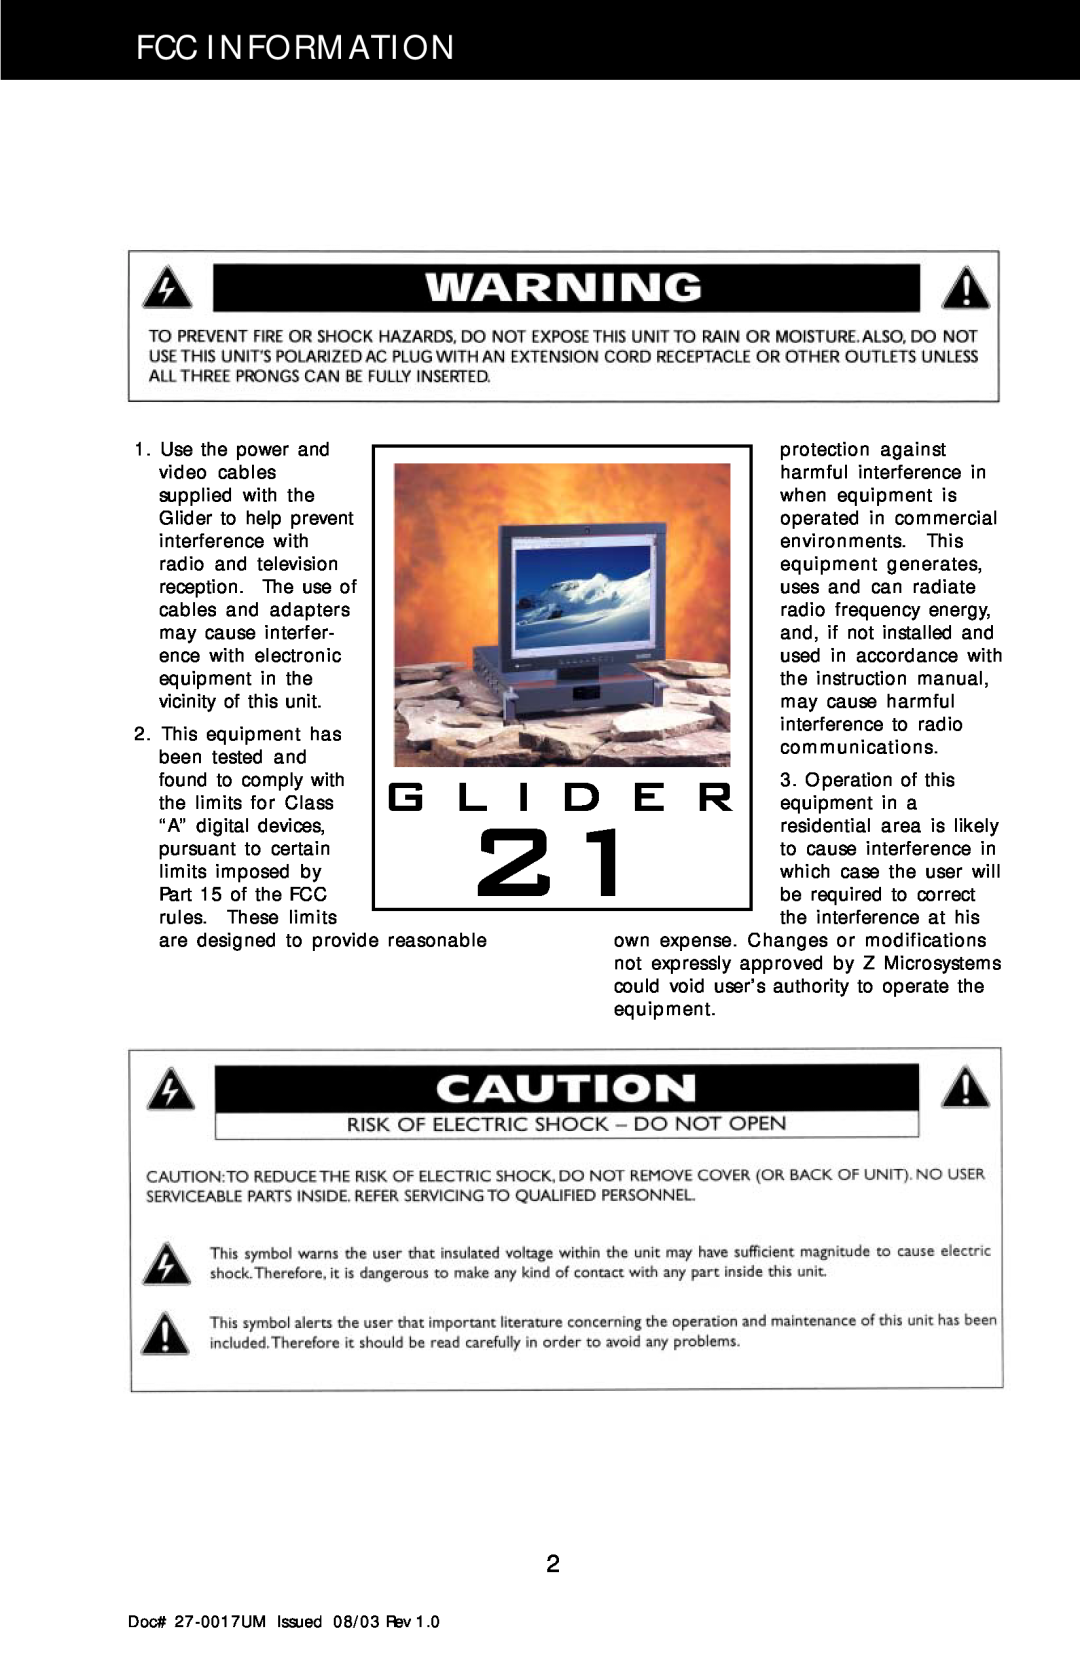 Z Microsystems 21 manual Fcc Information 